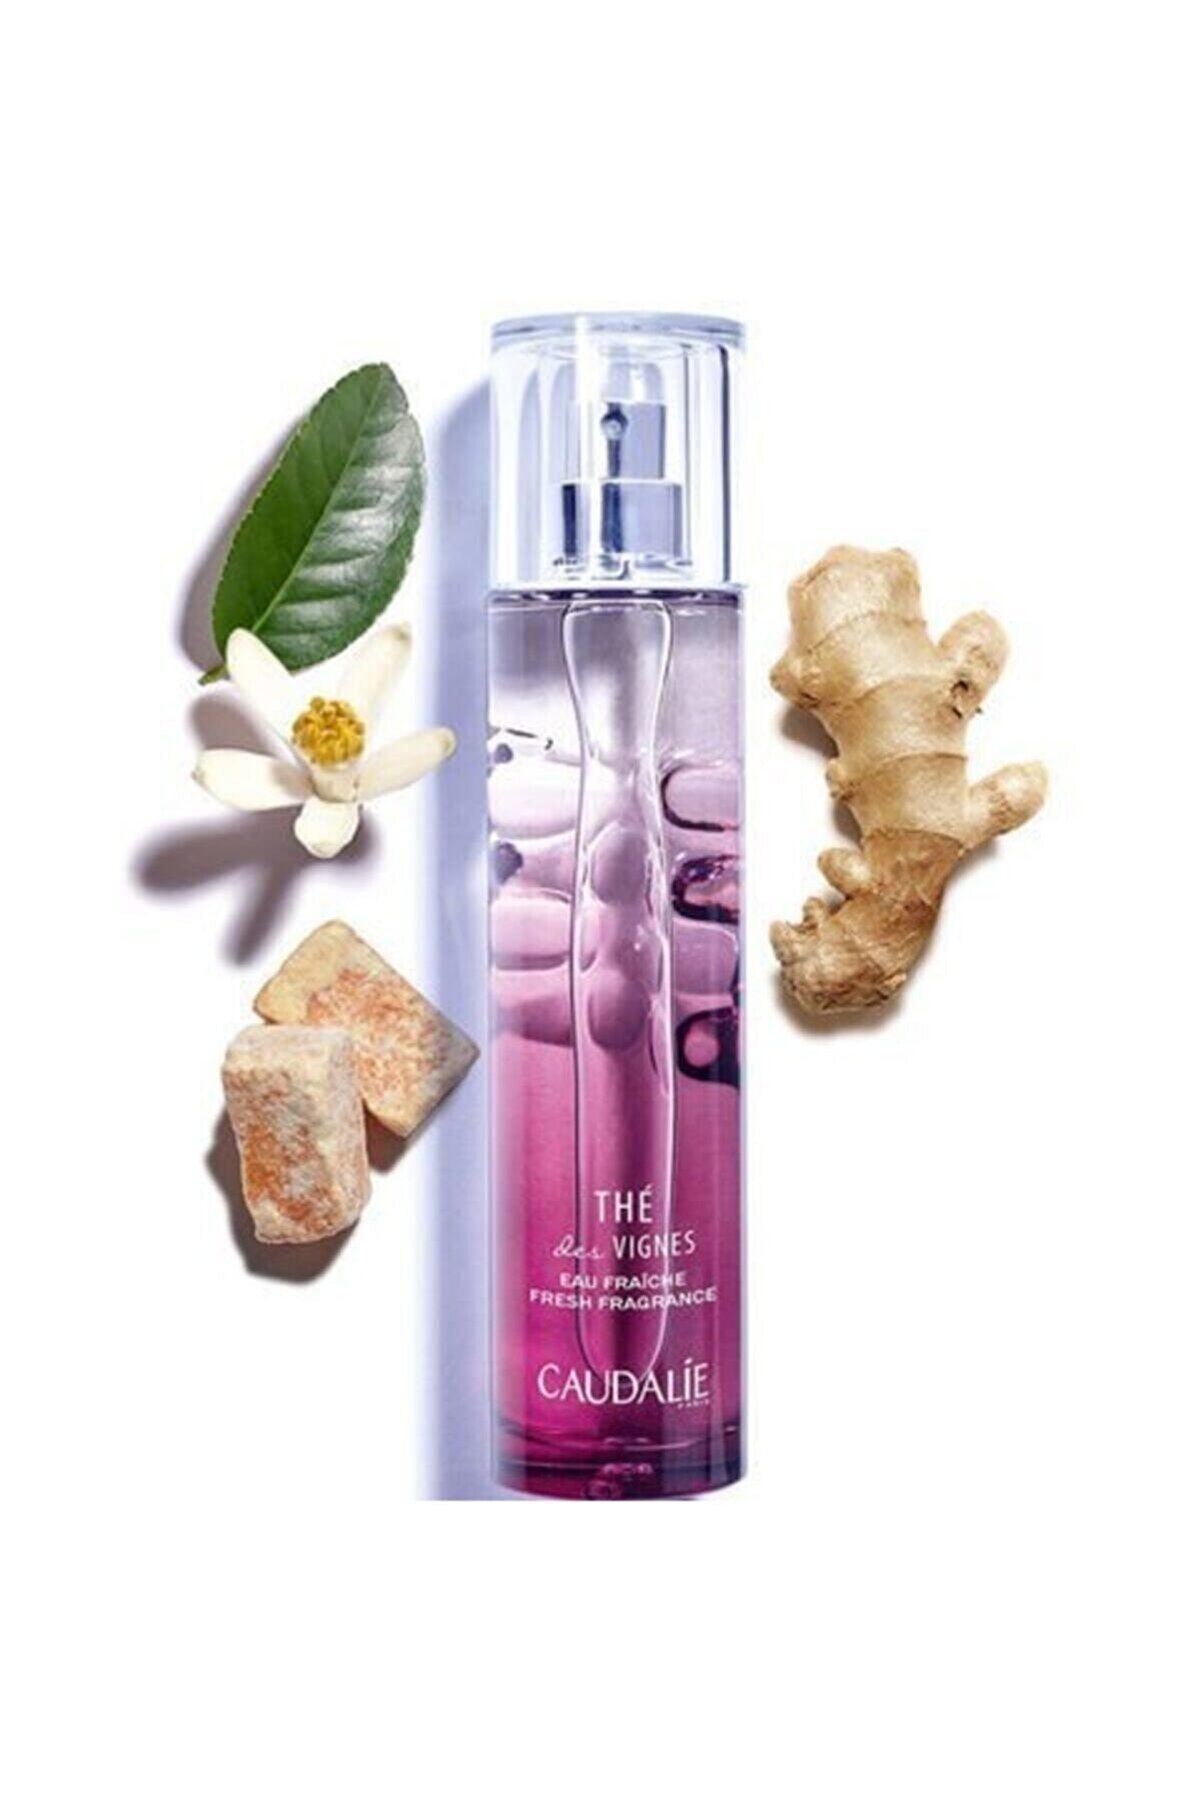 Caudalie The Des Vignes Energizing Fragrance 100ml | Beyaz Misk Ve Zencefil Aromalı Parfüm